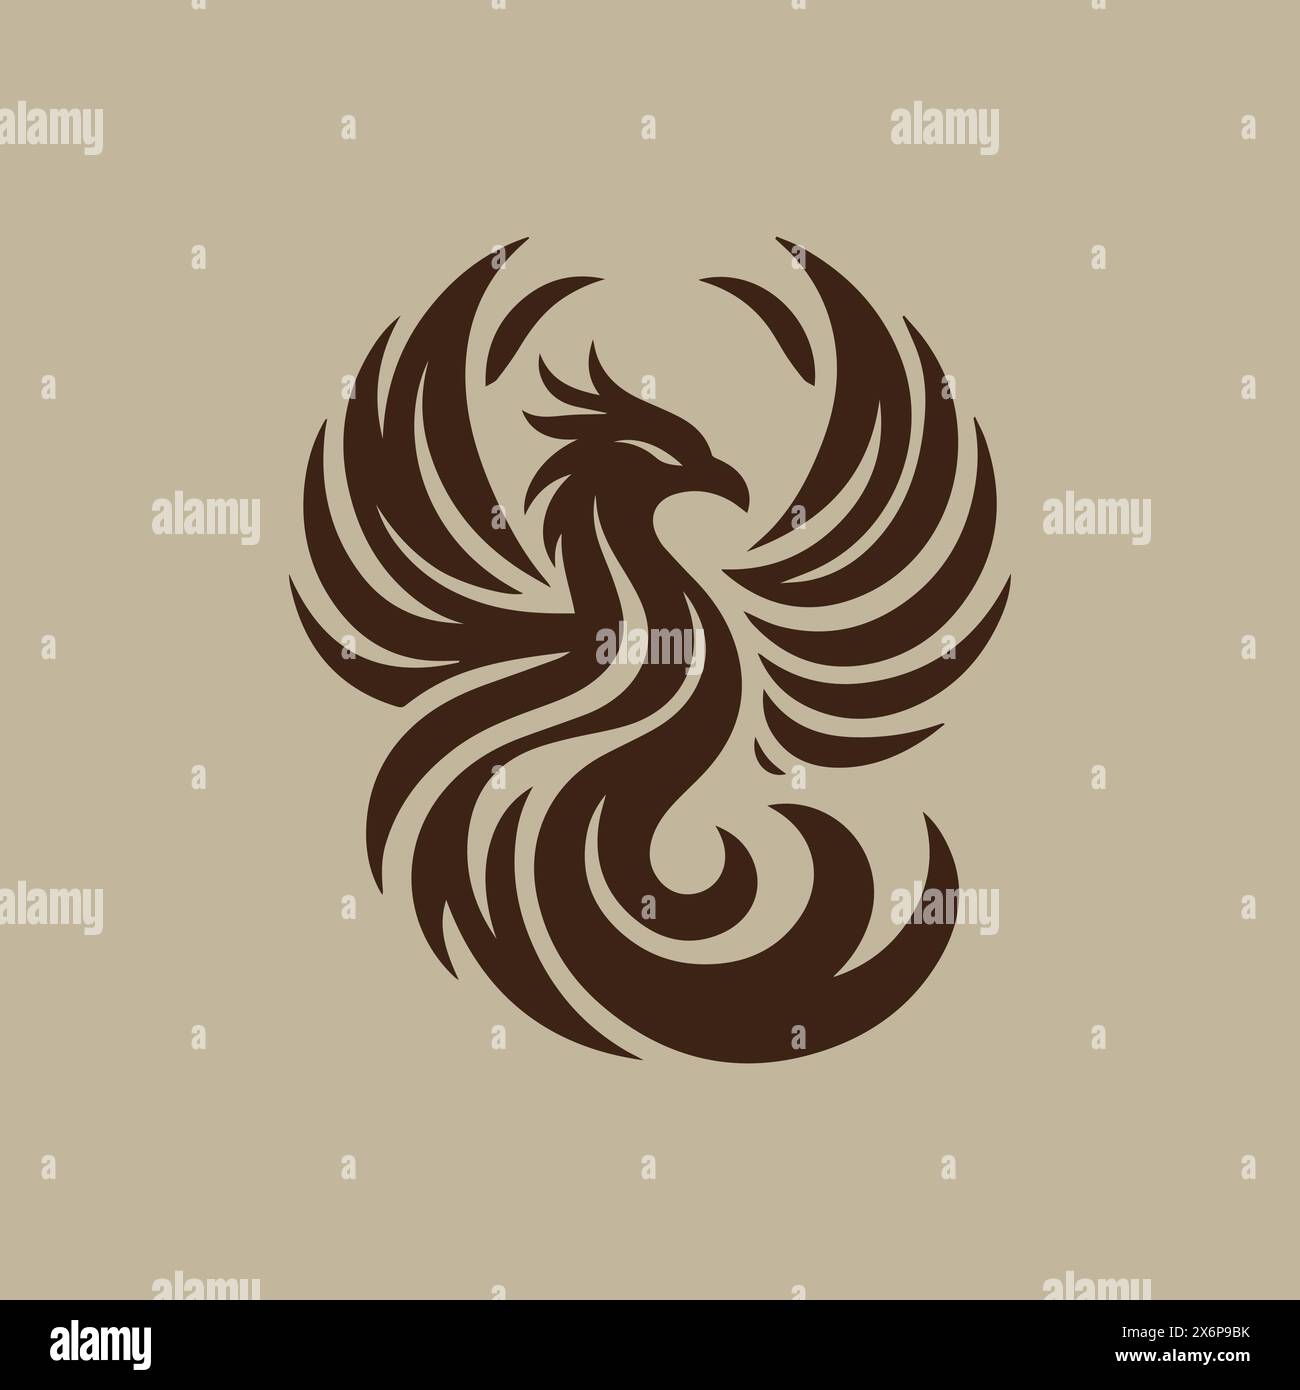 Elegant Phoenix Bird Logo Design: Timeless and Majestic Symbolism for a Distinguished Brand Identity Stock Vector